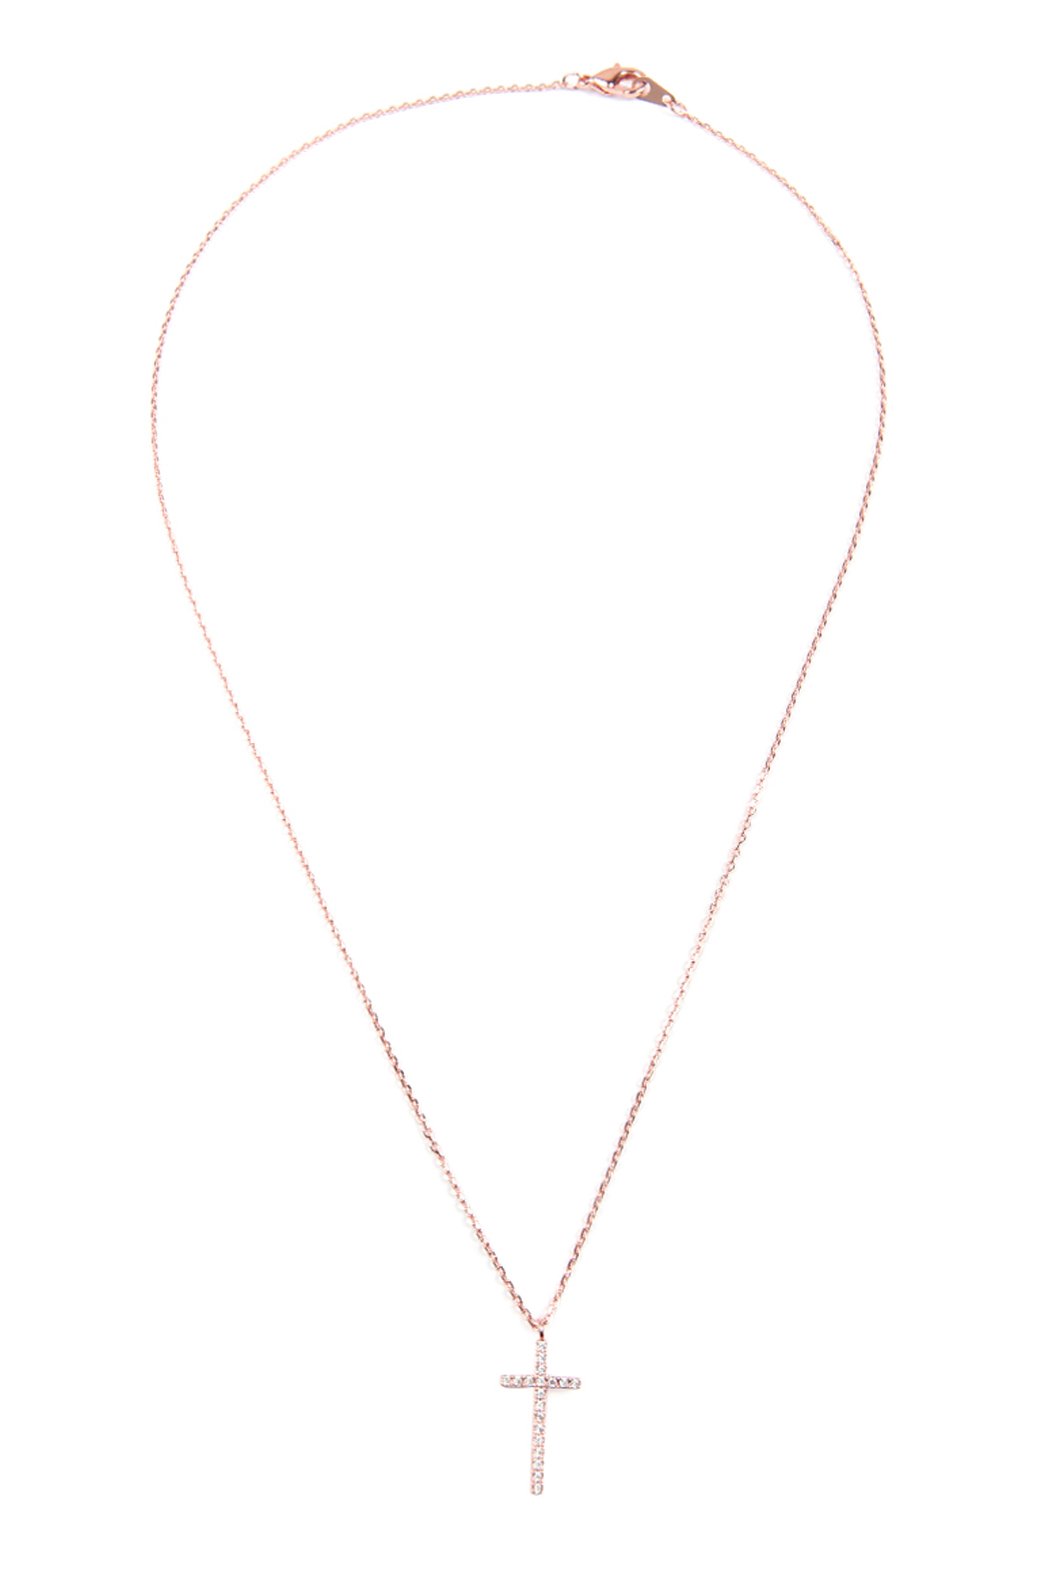 Hdnb1n242 - Zircon Cross Pendant Necklace - LOLA LUXE